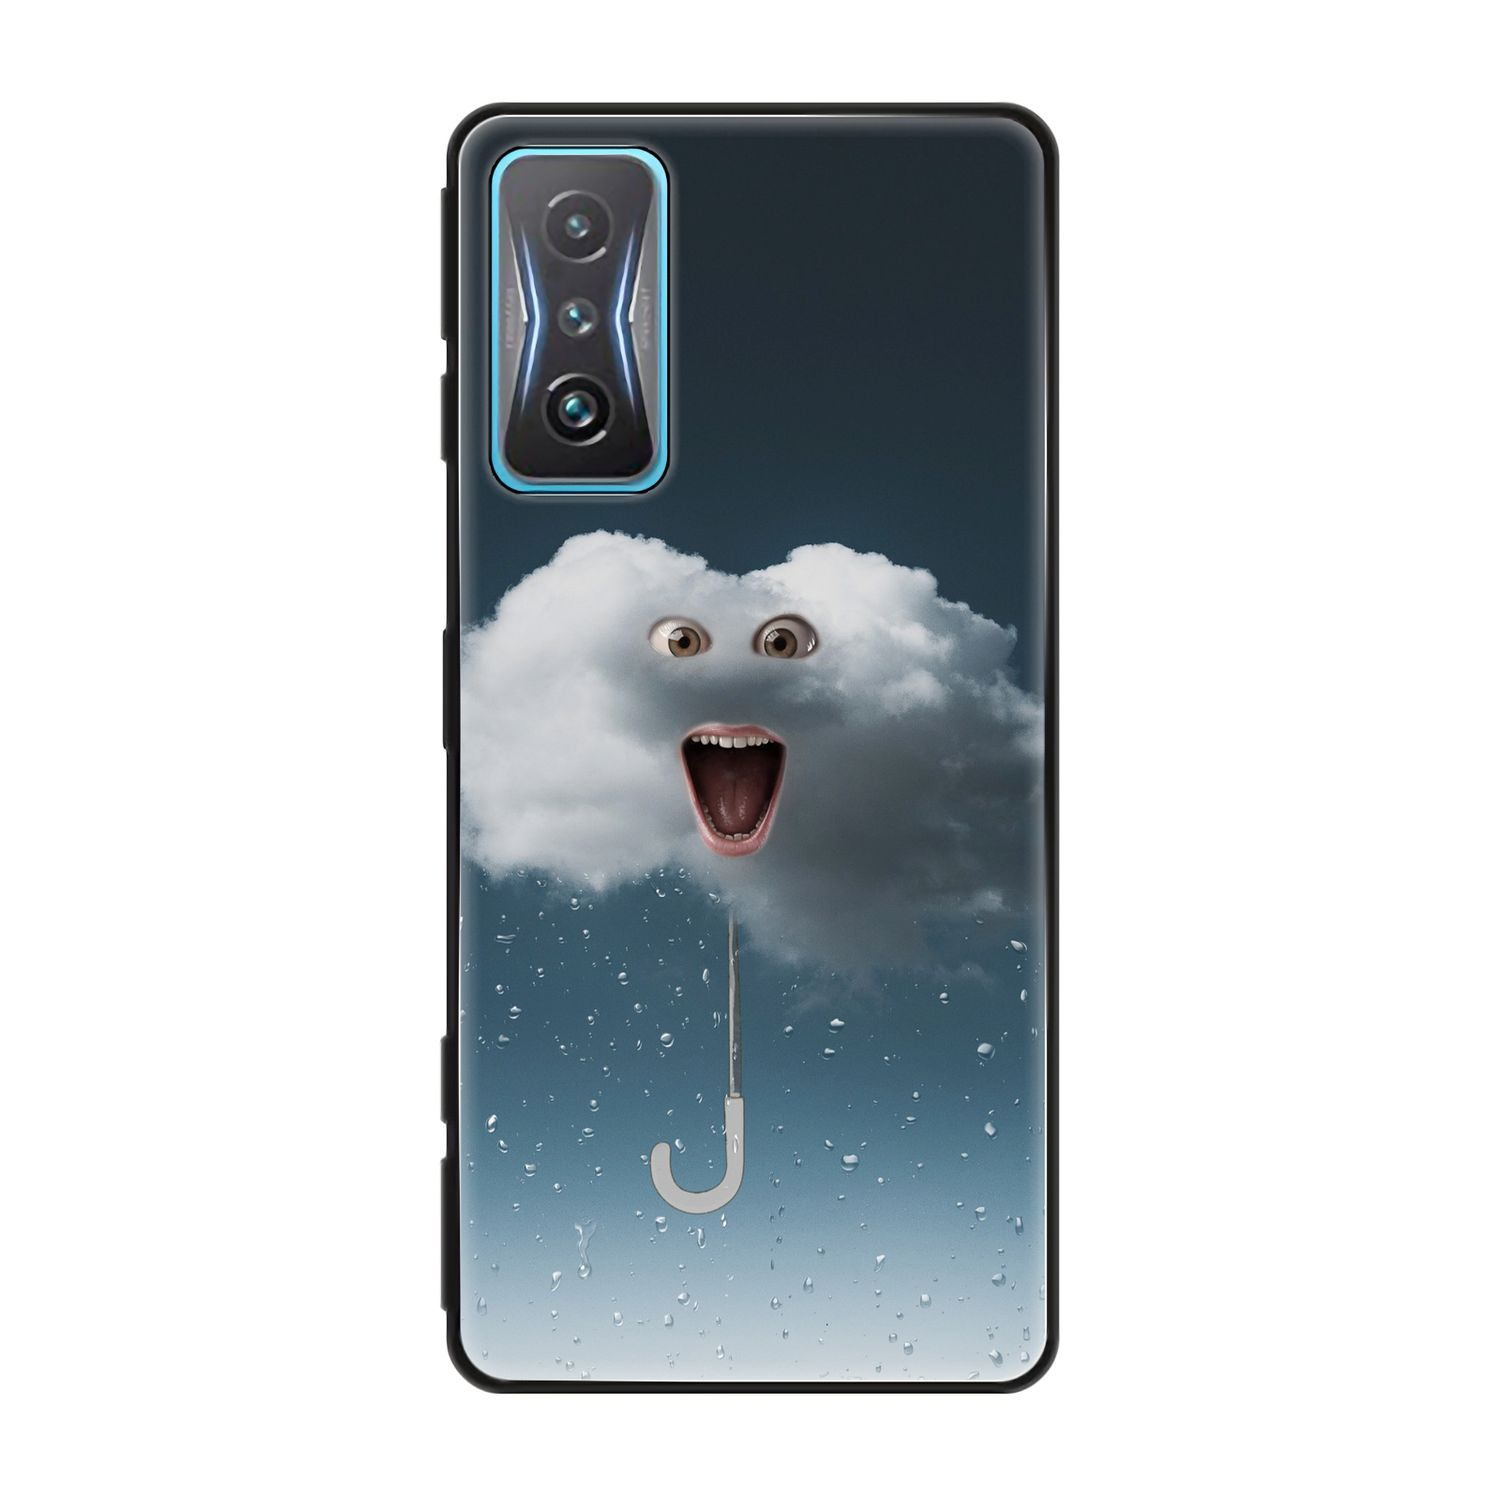 Regenwolke Redmi KÖNIG Backcover, K50 DESIGN Case, Xiaomi, Gaming,